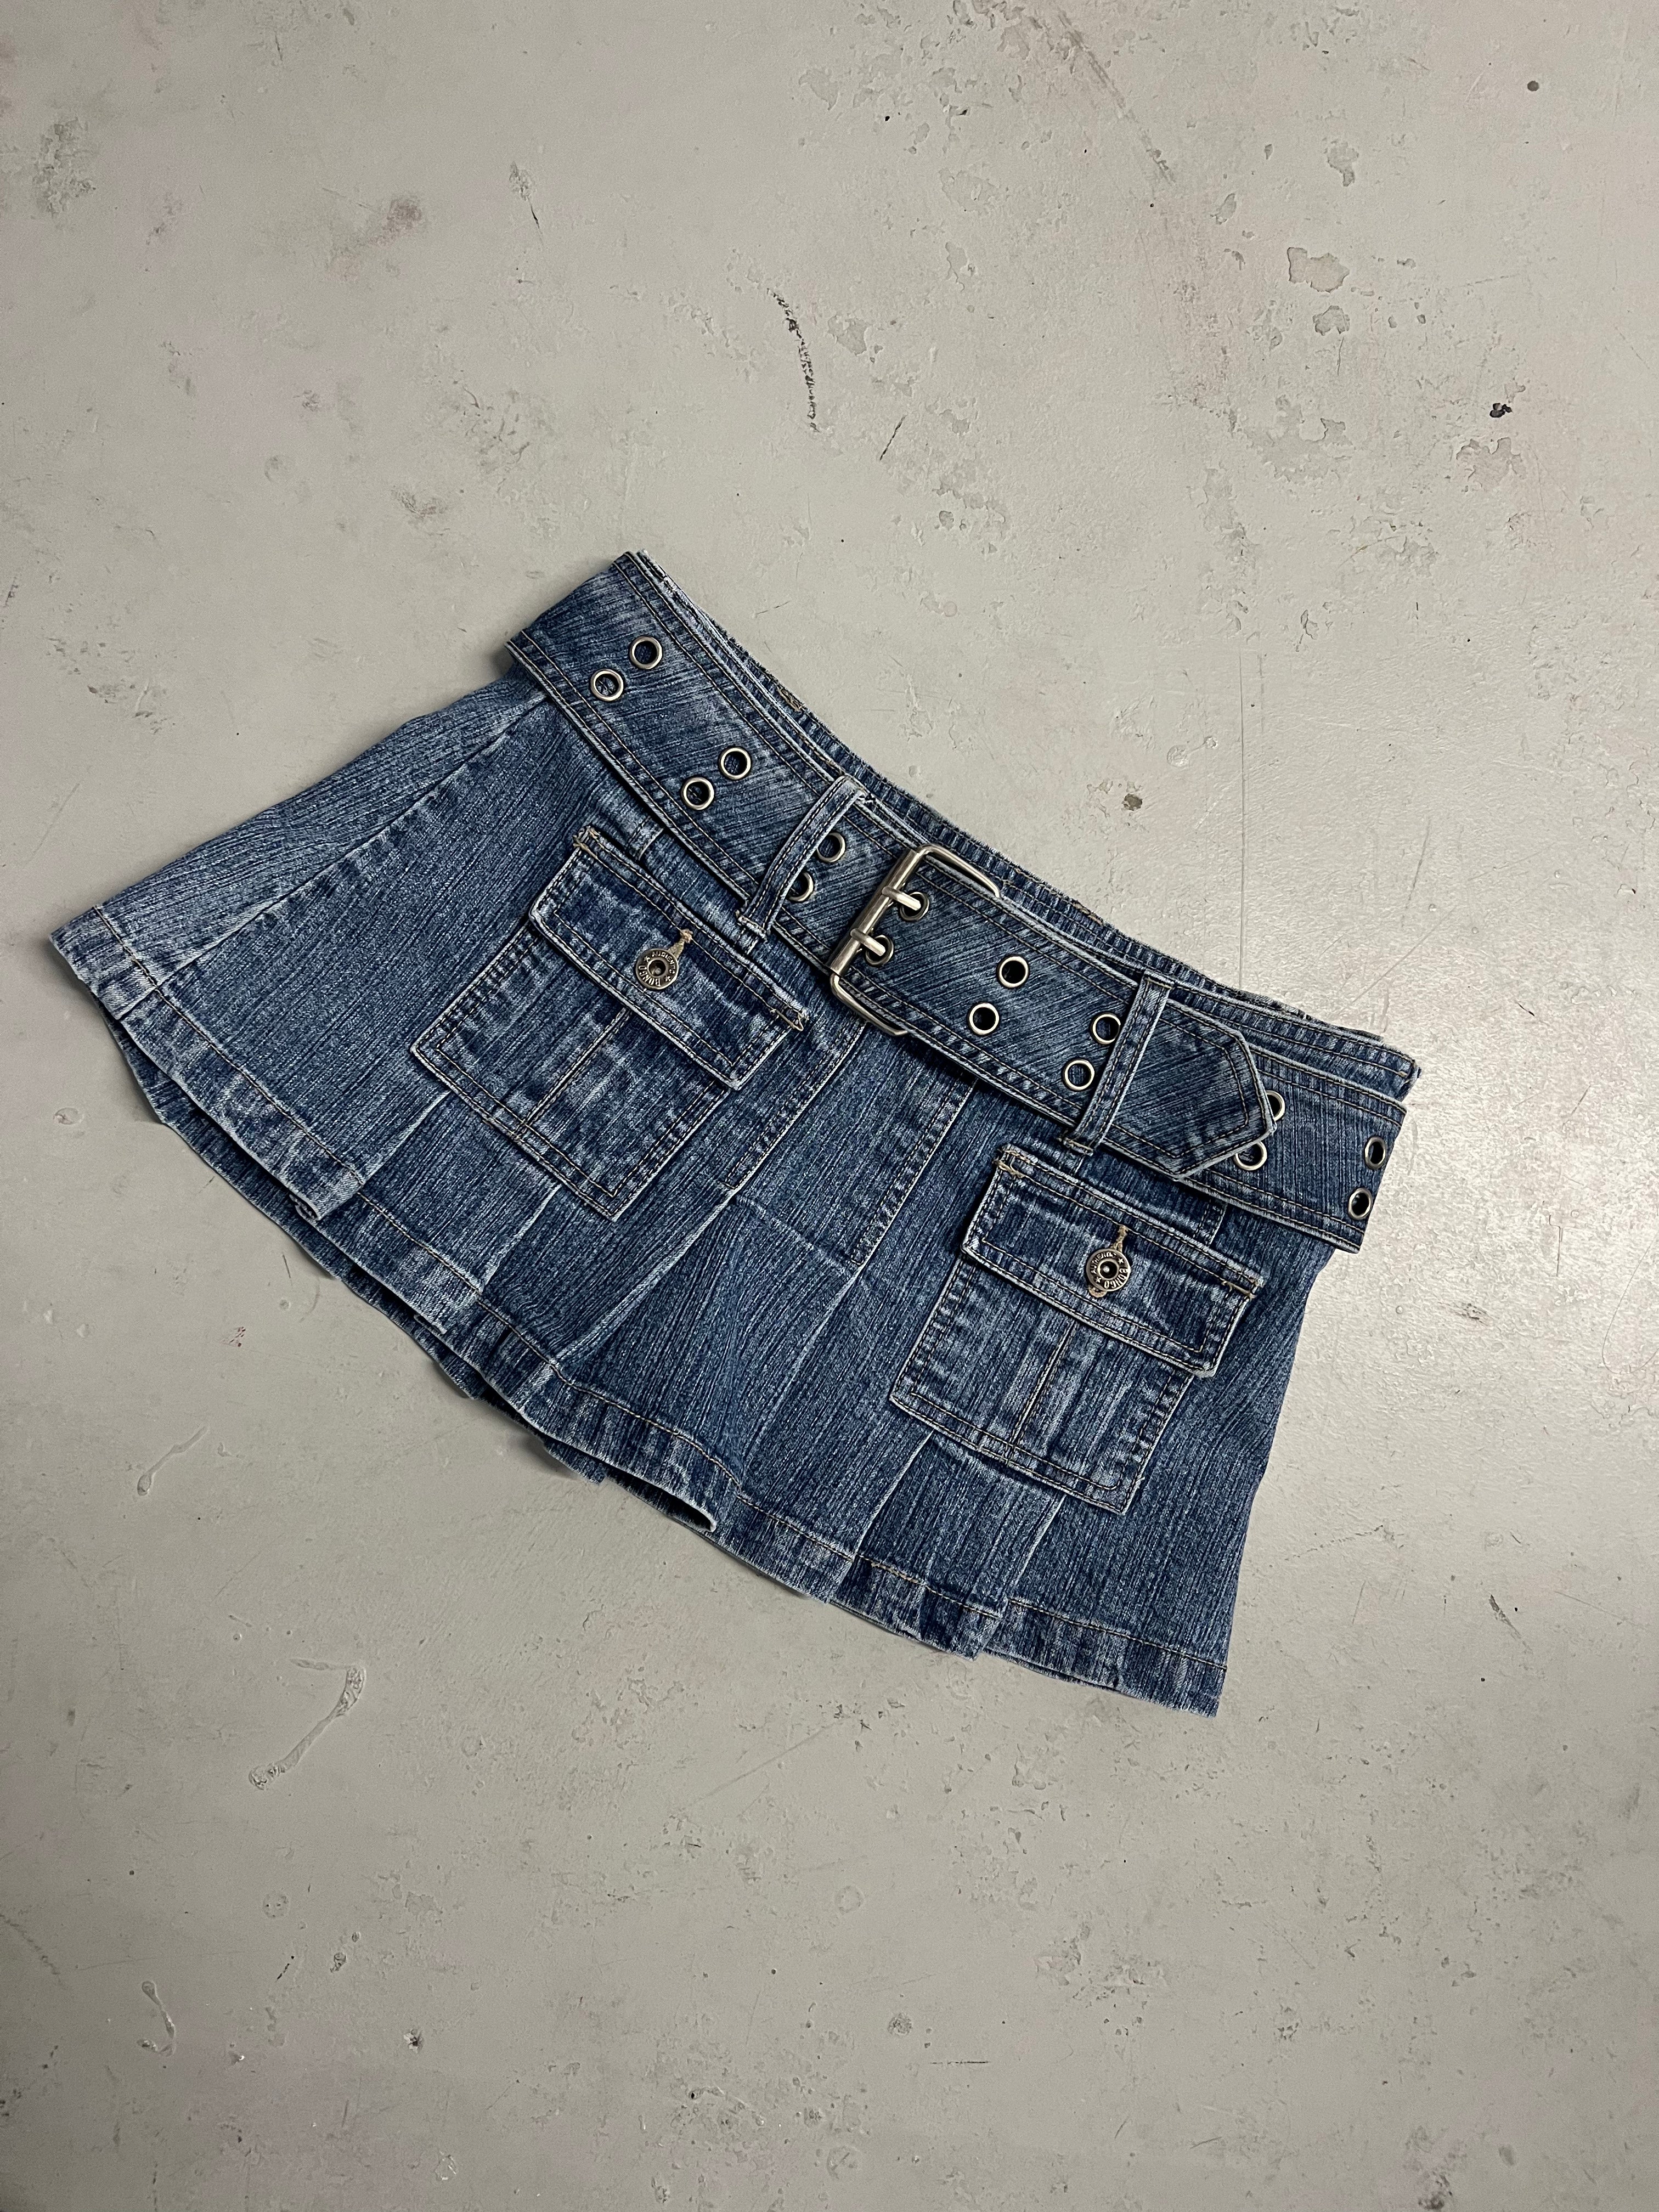 Micro Mini Denim Skirt